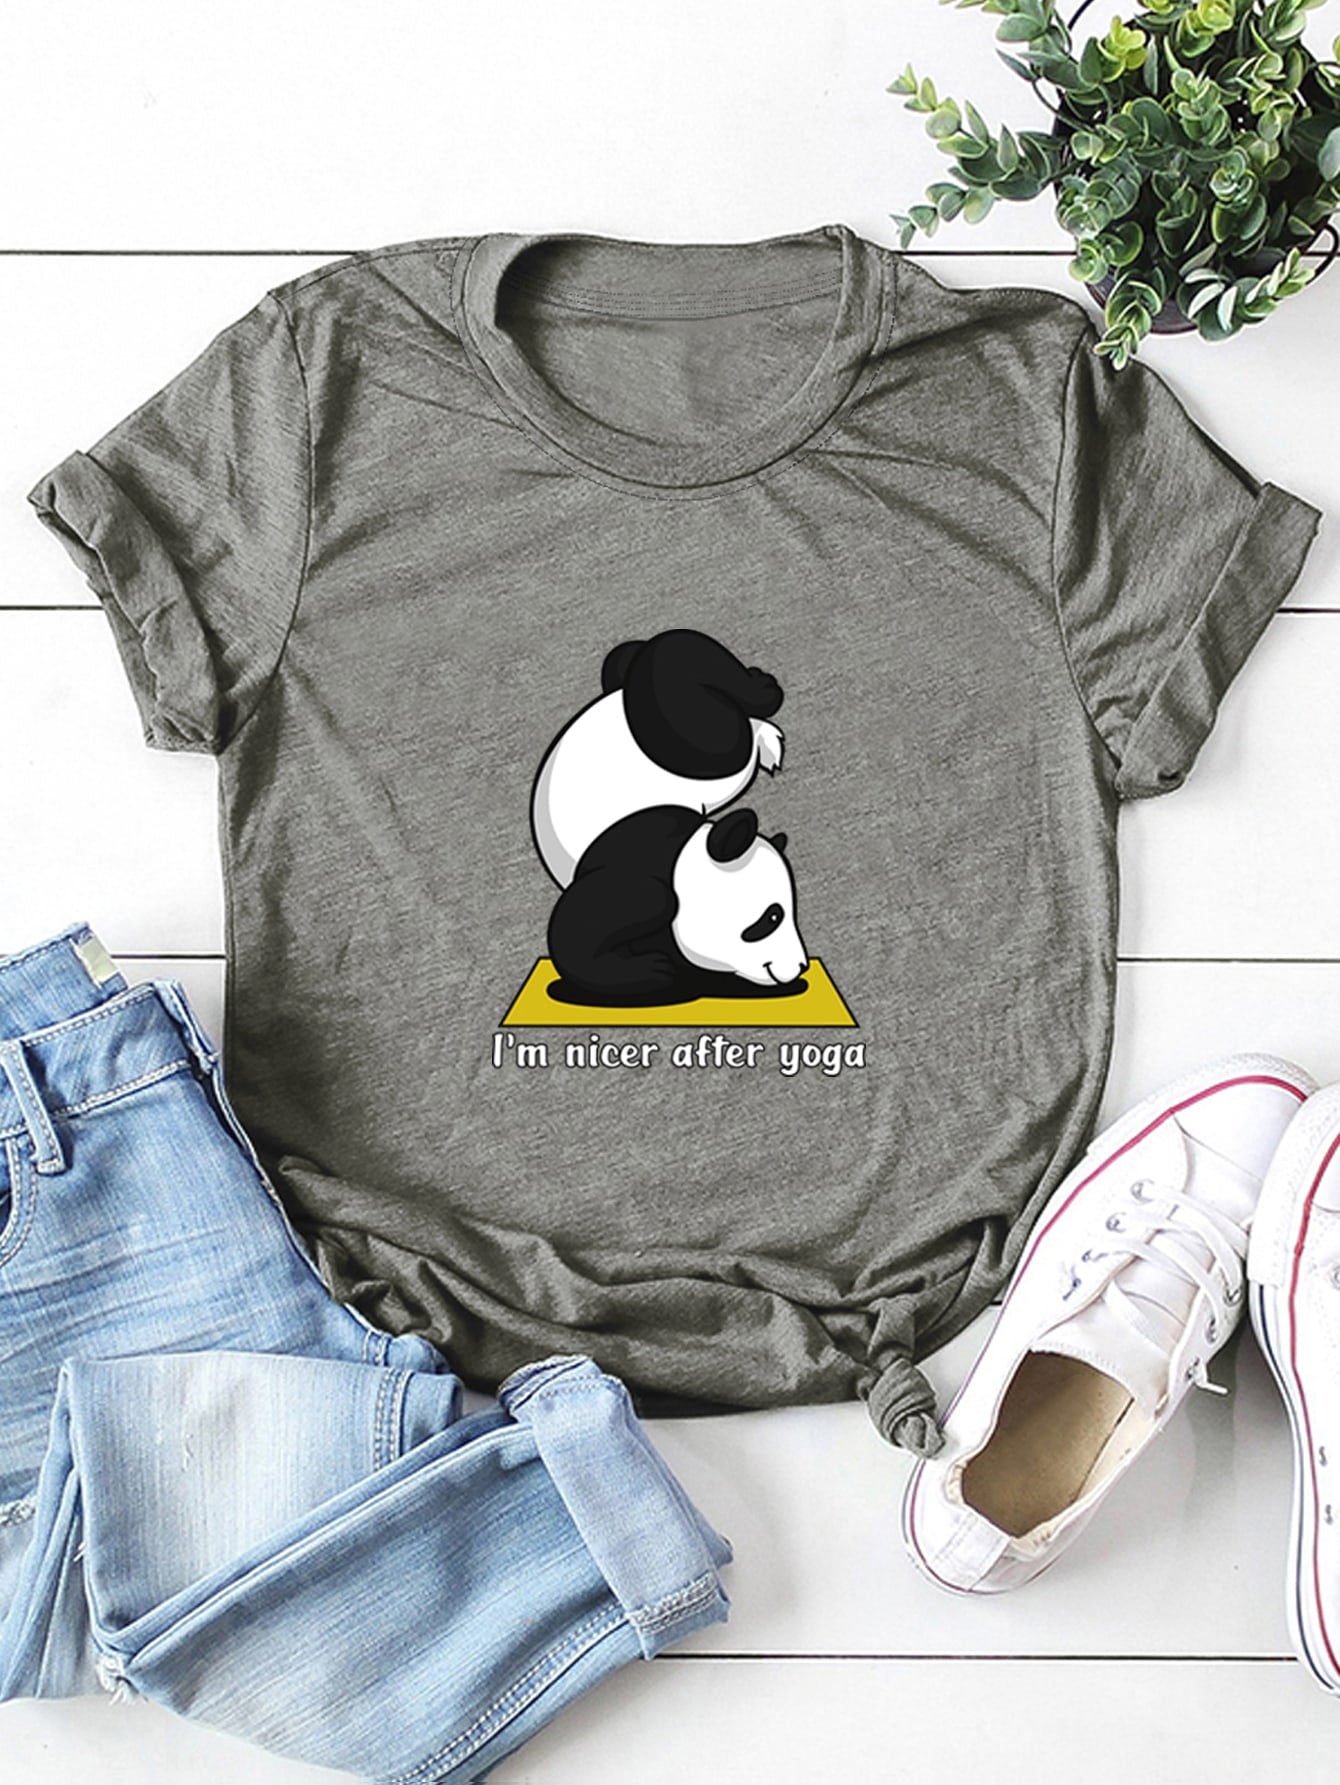 Cartoon Panda And Slogan Graphic Tee